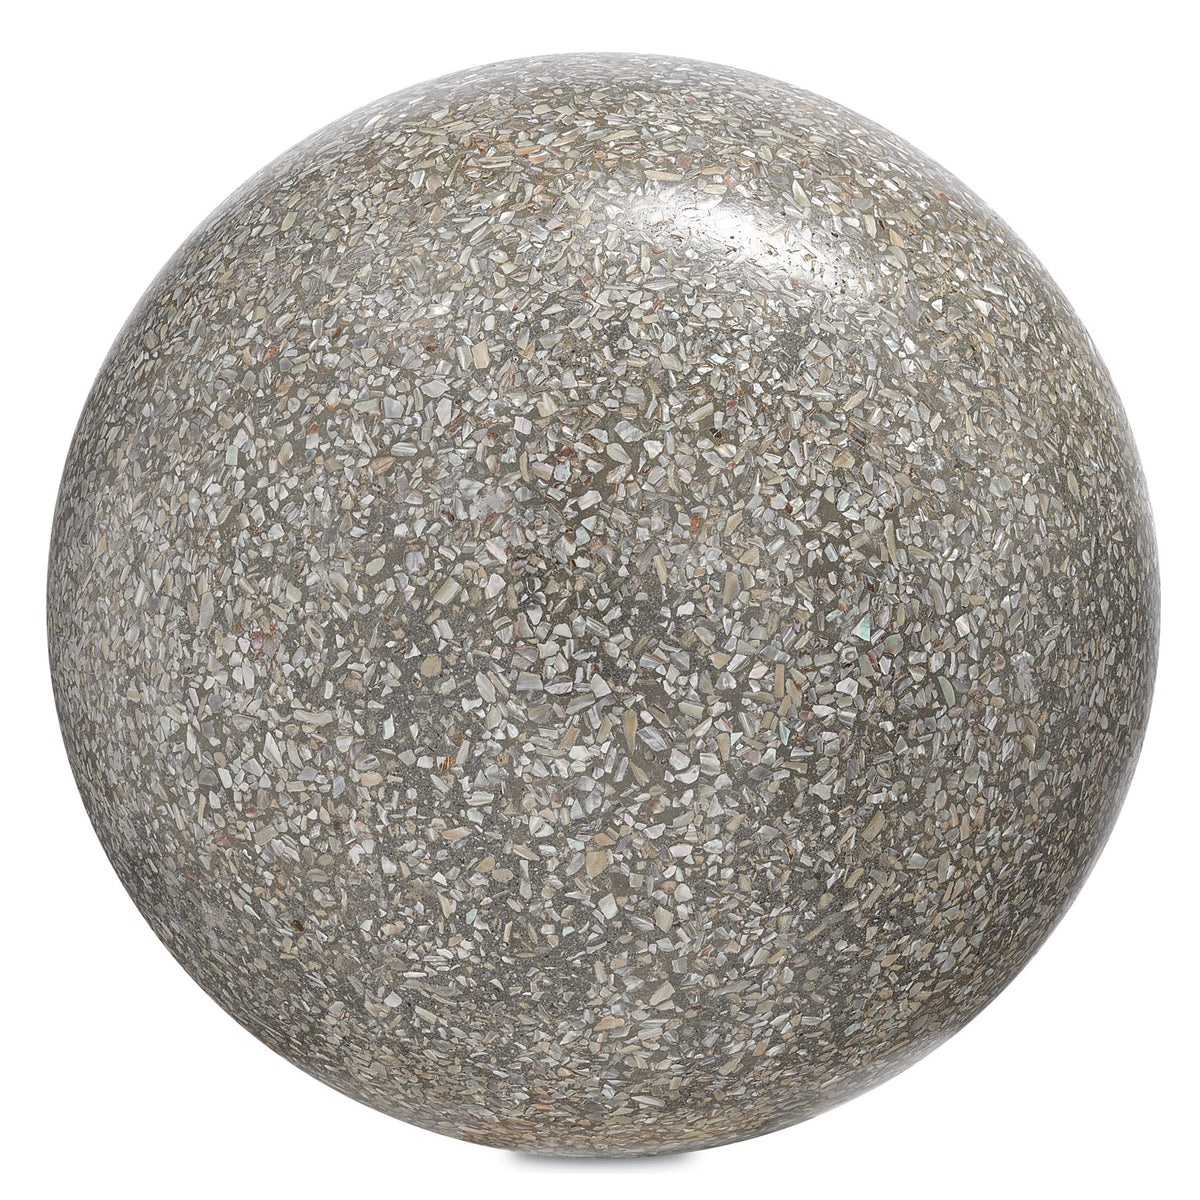 Abalone Large Concrete Ball